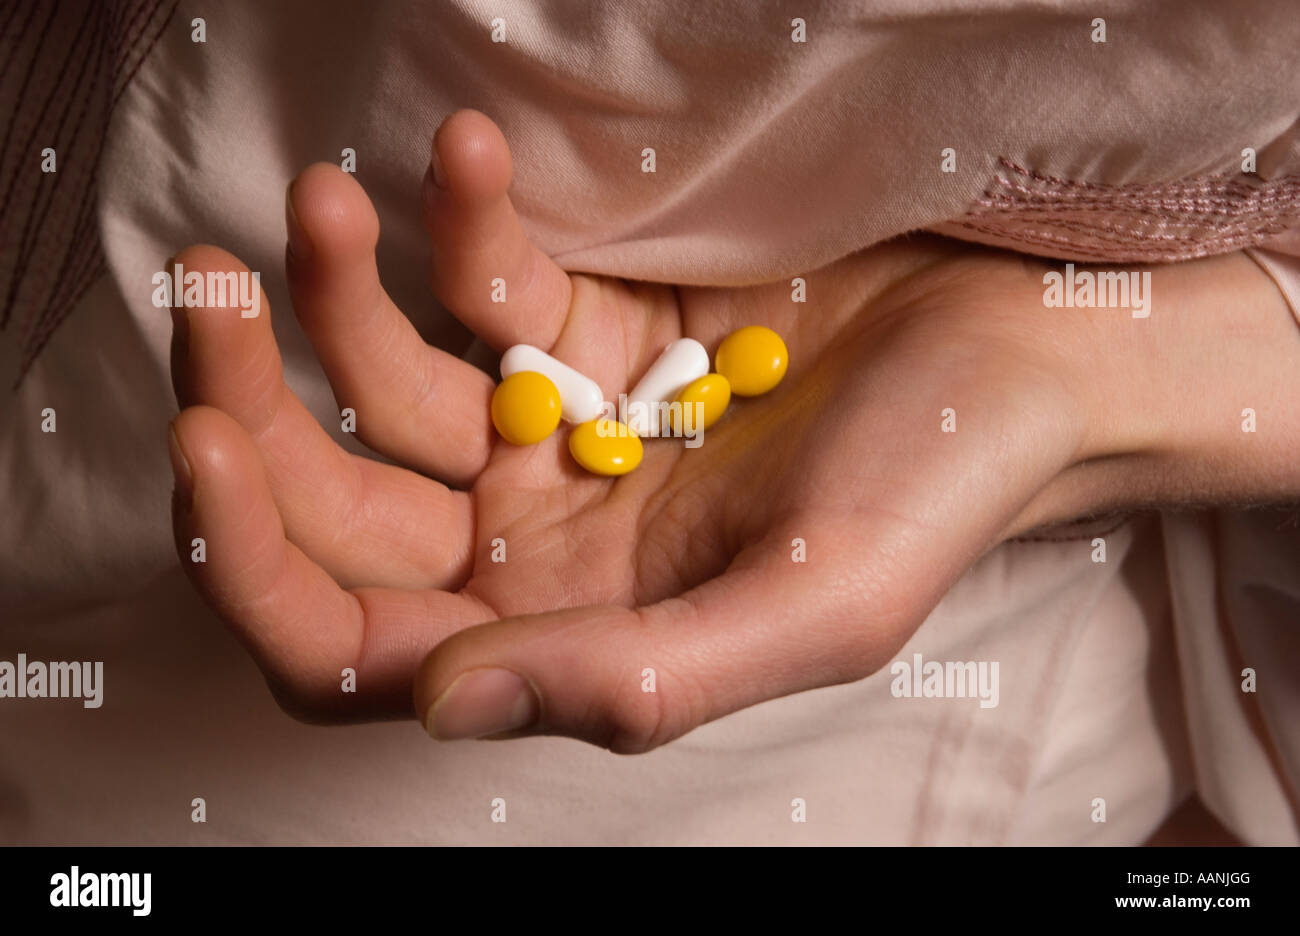 Person on floor under pink duvet showing pills in hand Stock Photo